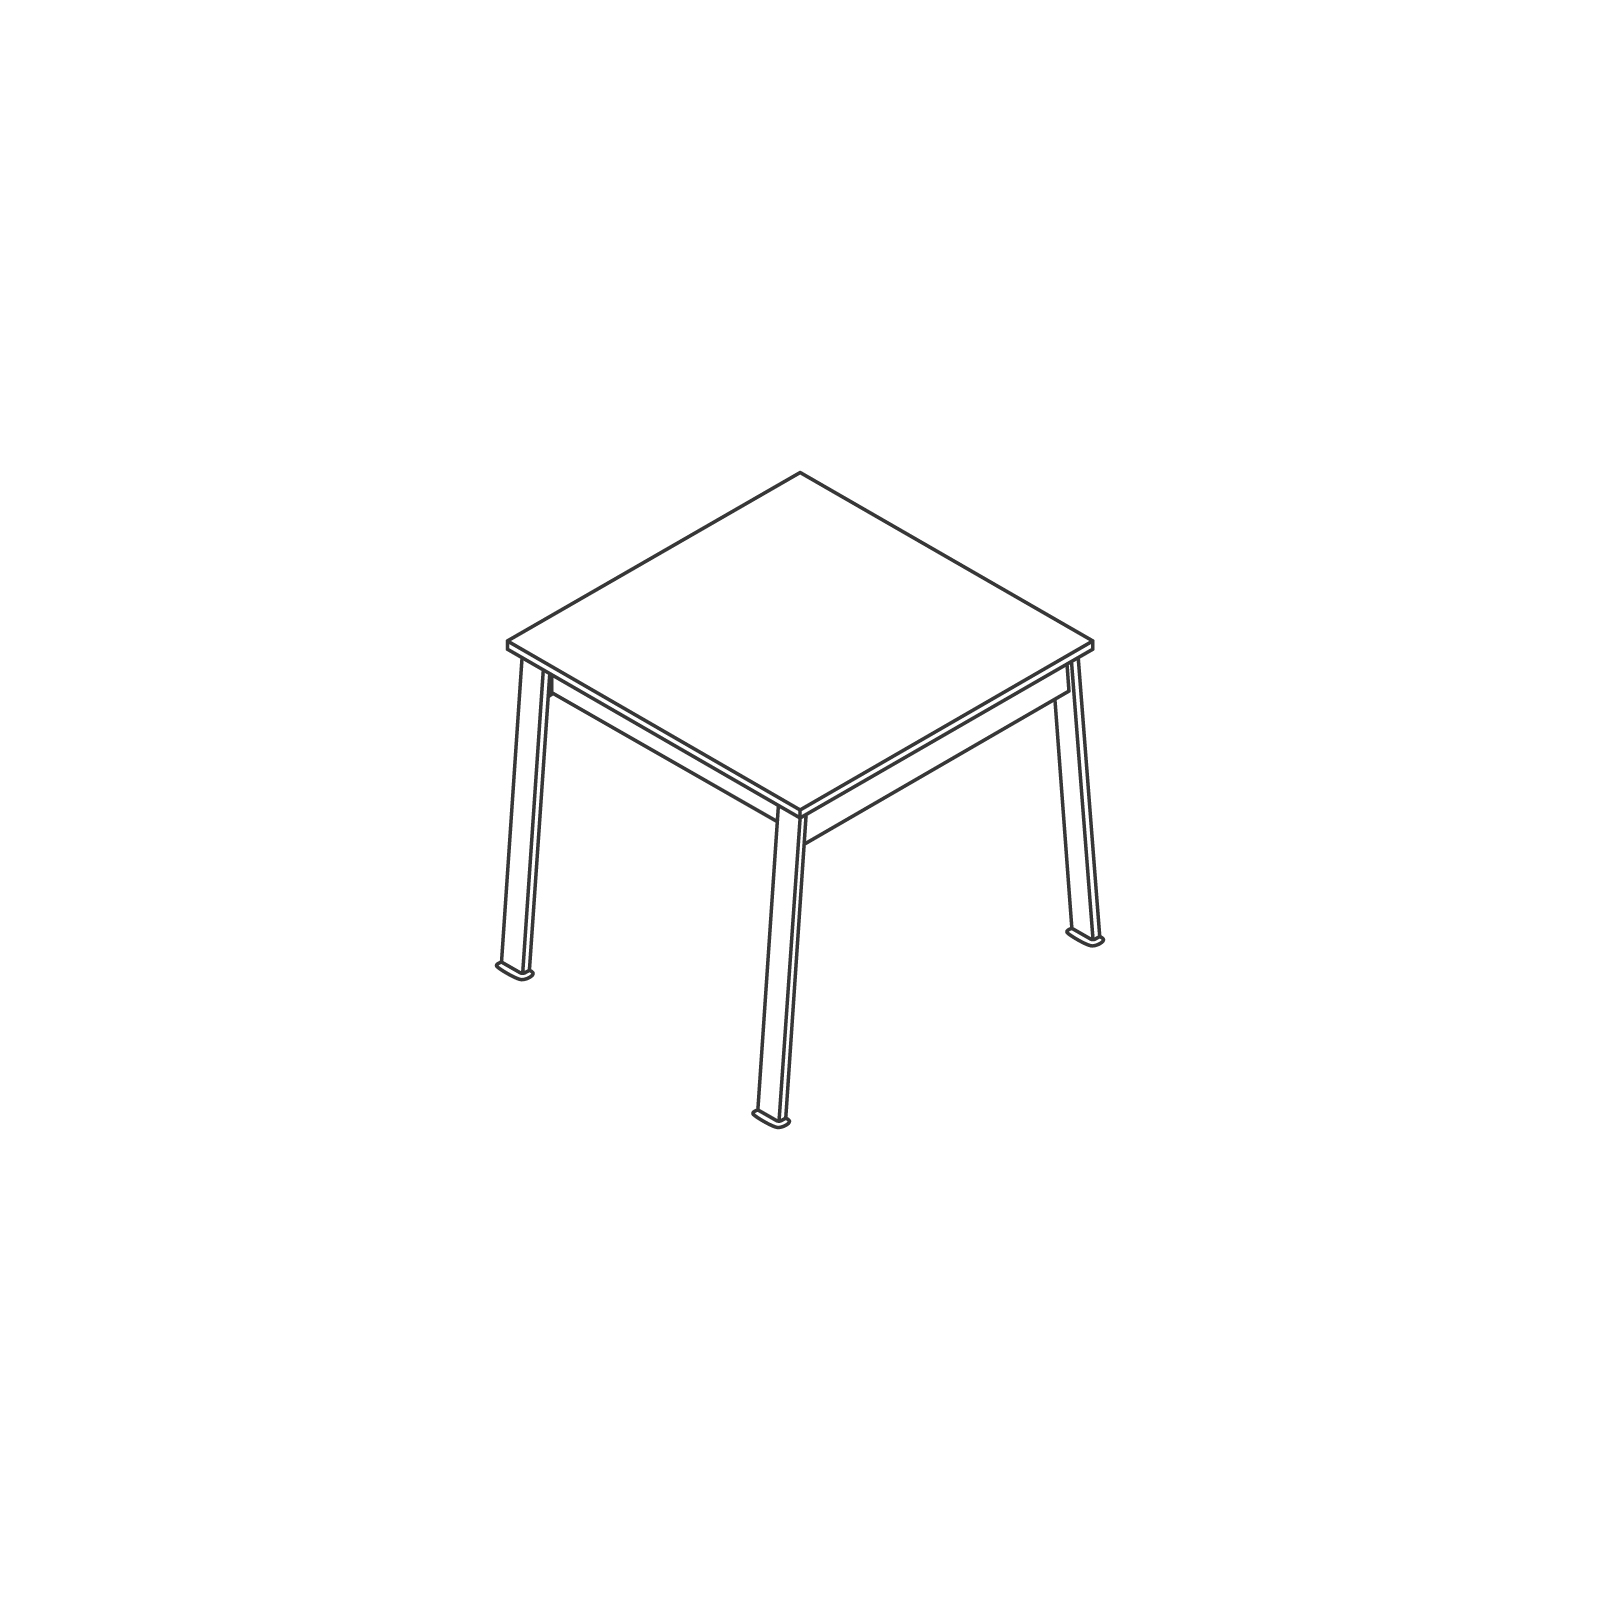 A line drawing - Nemschoff Easton Side Table